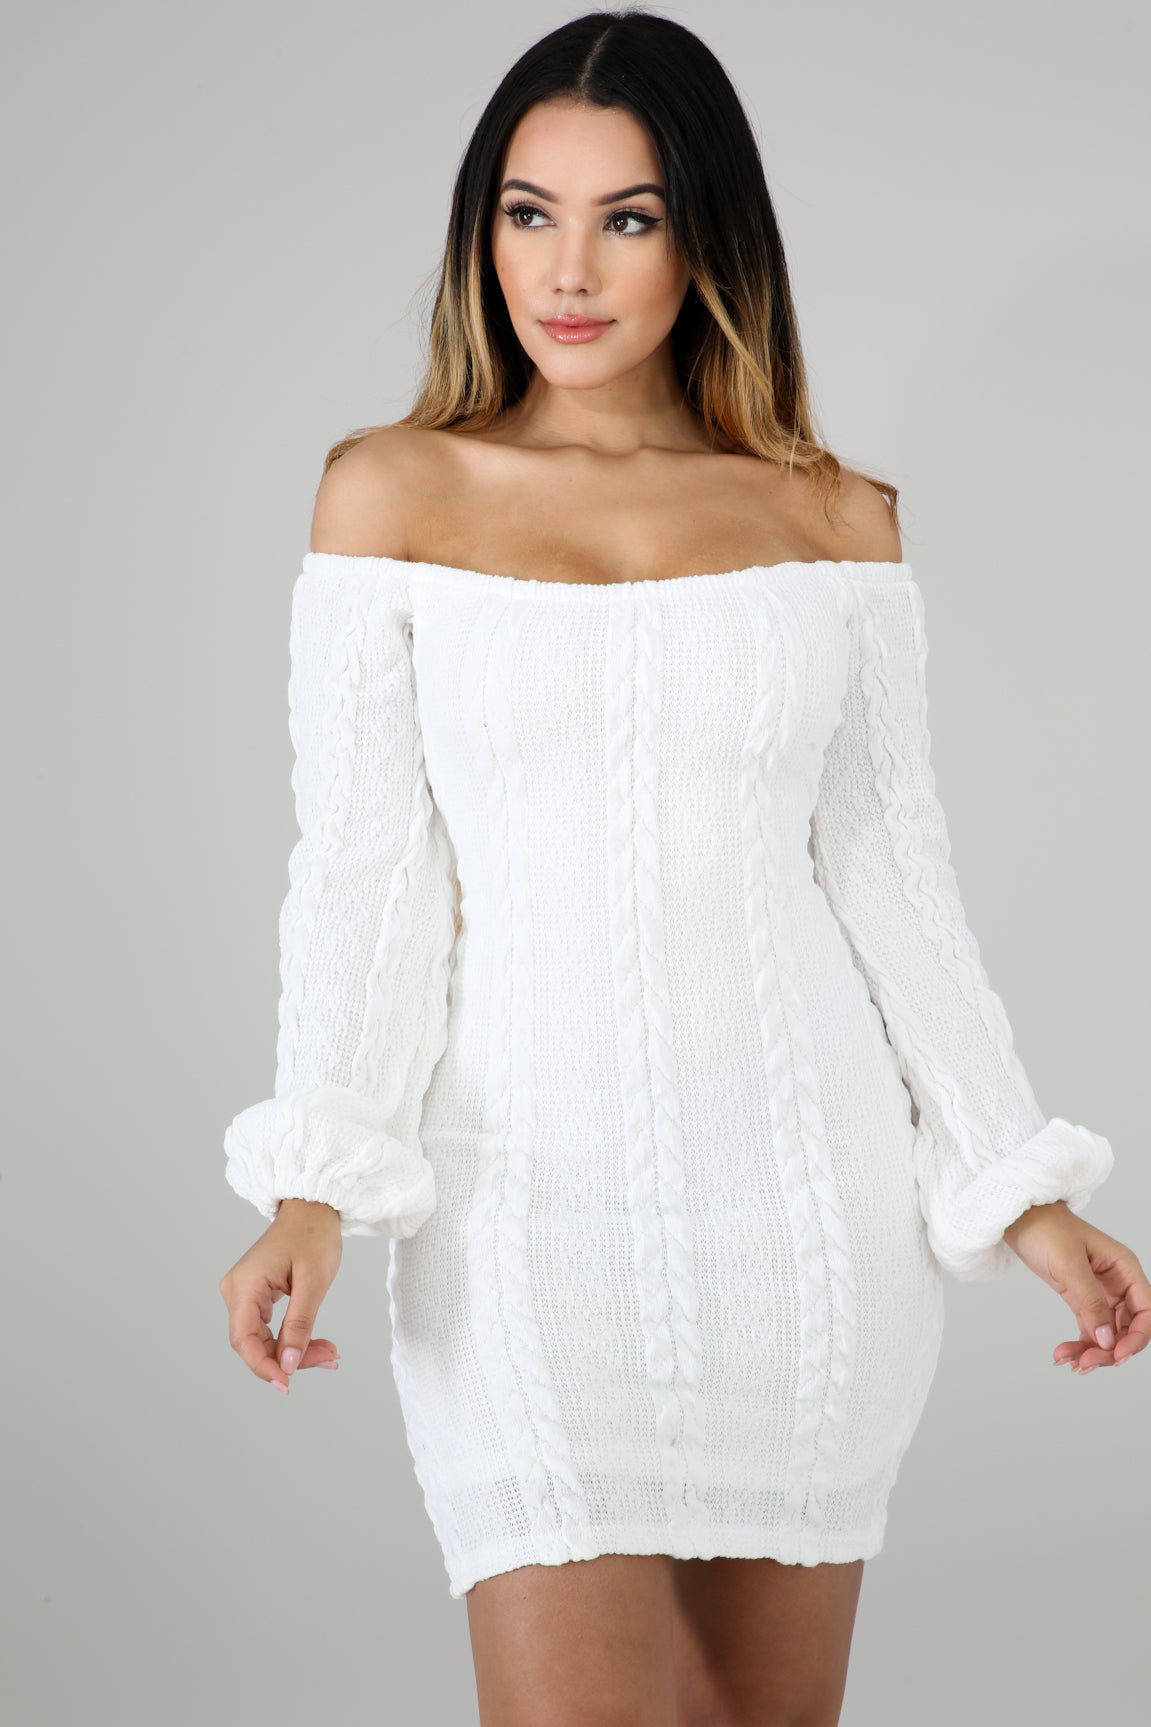 Innocent White Cable Knit Bardot Dress - 1 Hot Diva